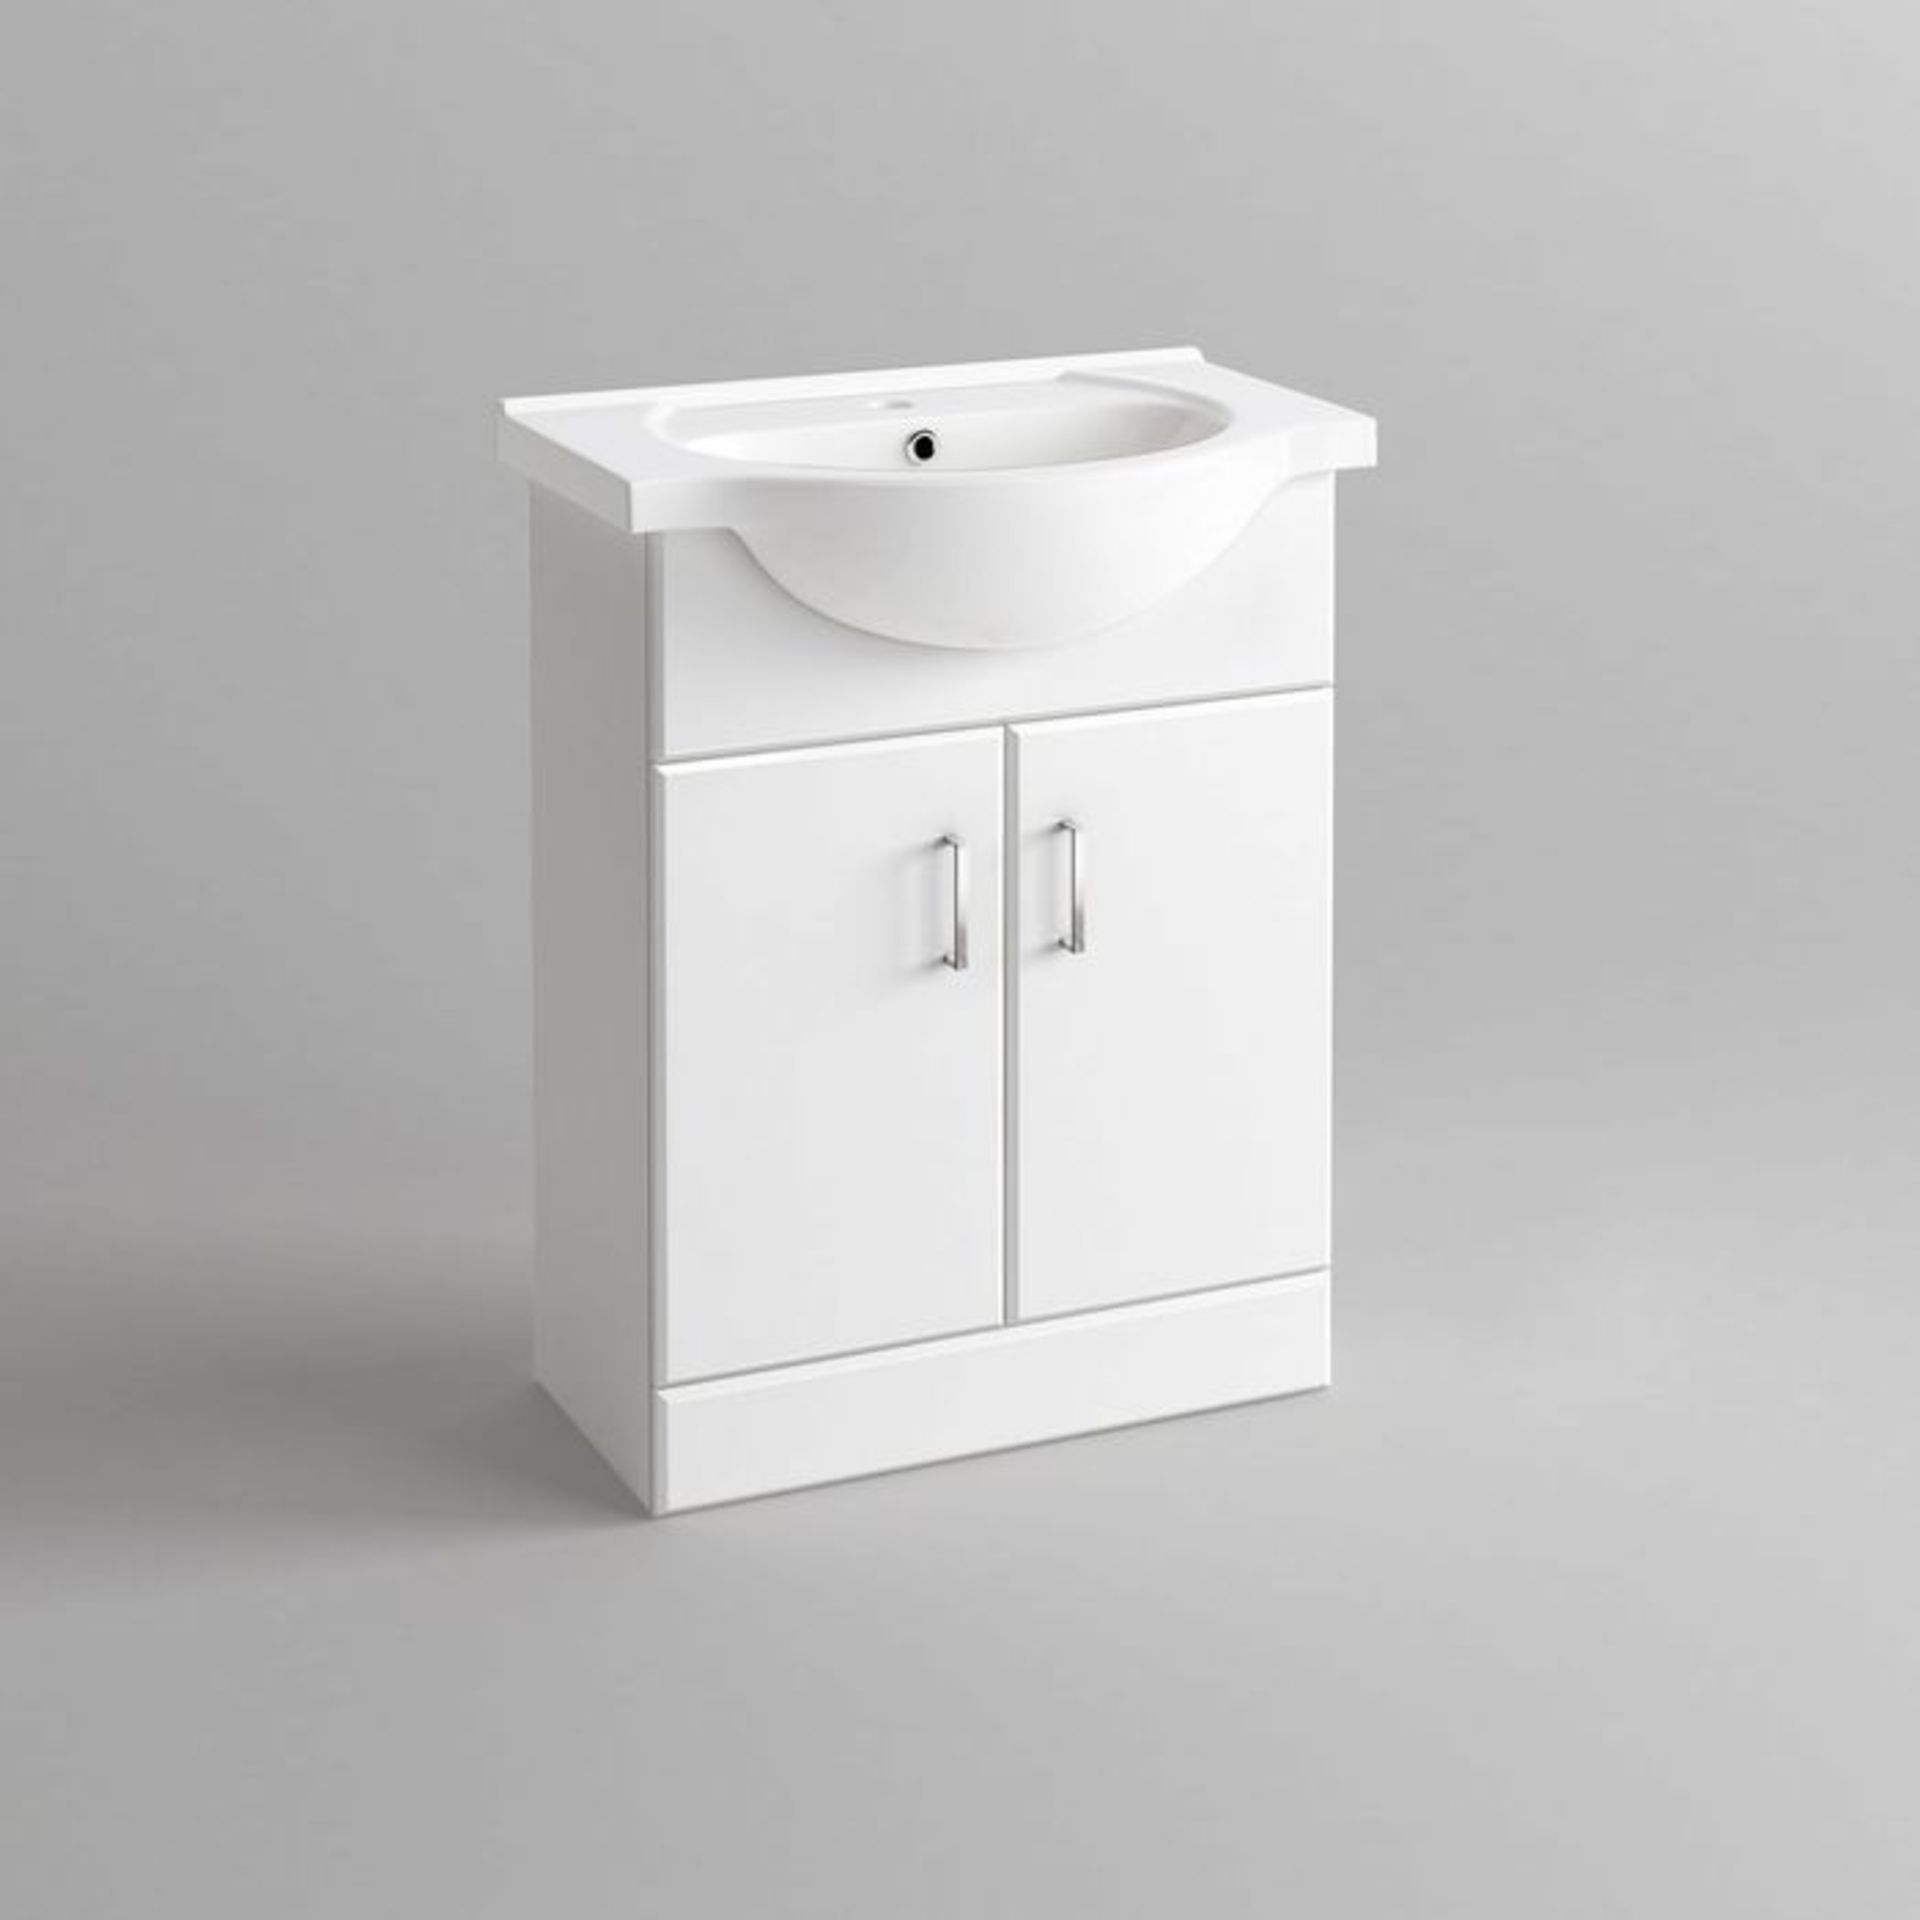 (AL82) 550x300mm Quartz Gloss White Built In Basin Cabinet. Comes complete with basin. Pristine - Image 4 of 4